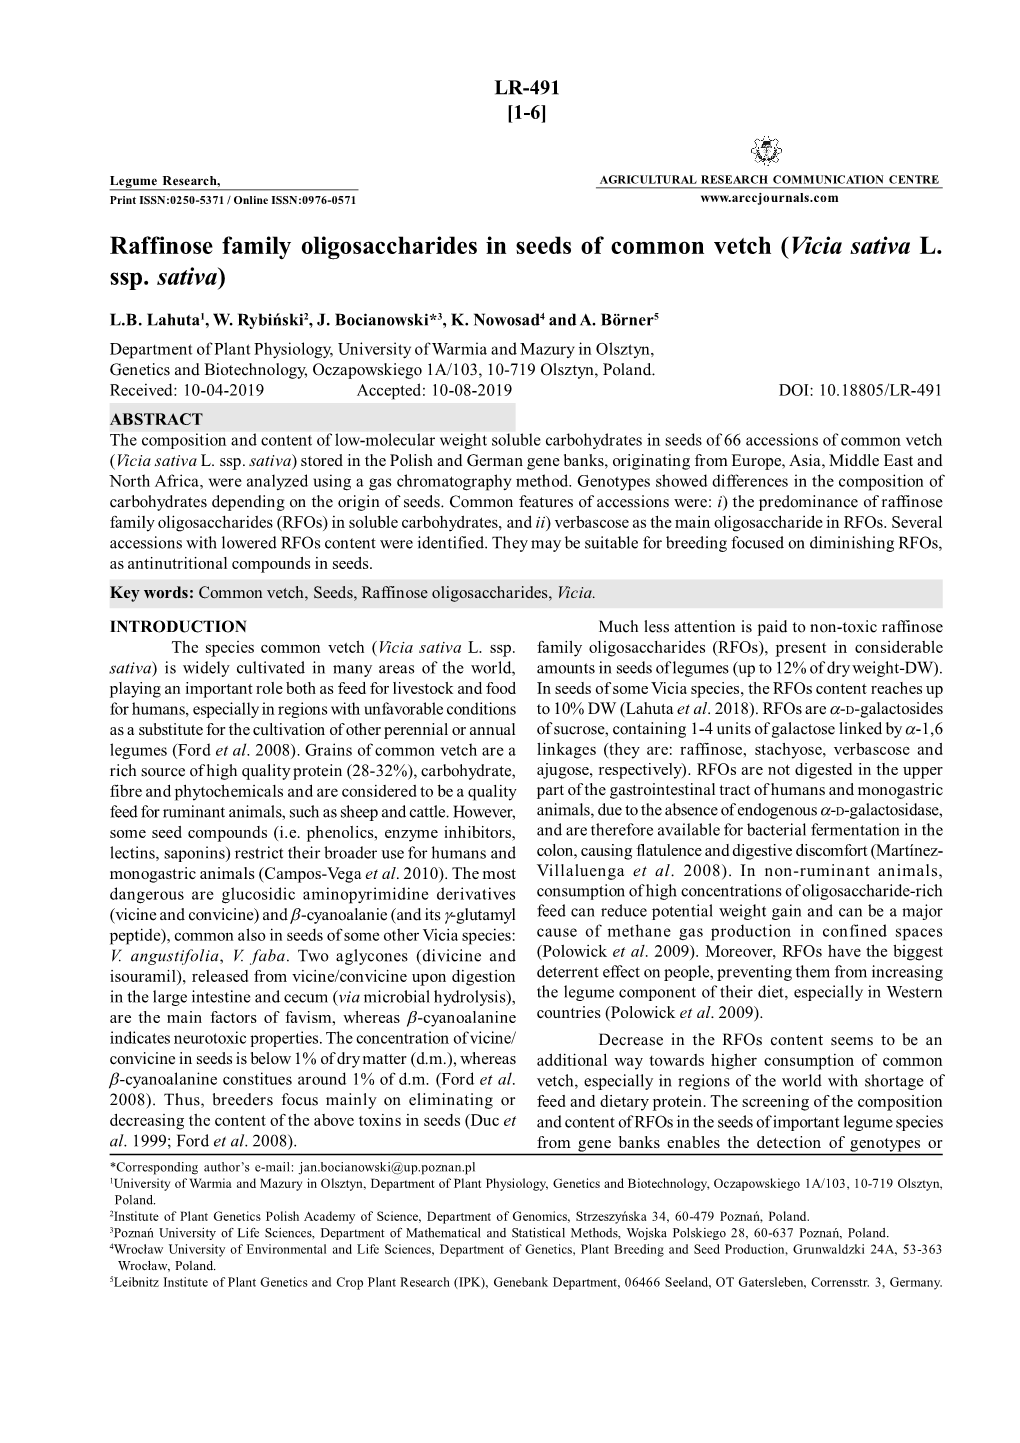 Raffinose Family Oligosaccharides in Seeds of Common Vetch (Vicia Sativa L